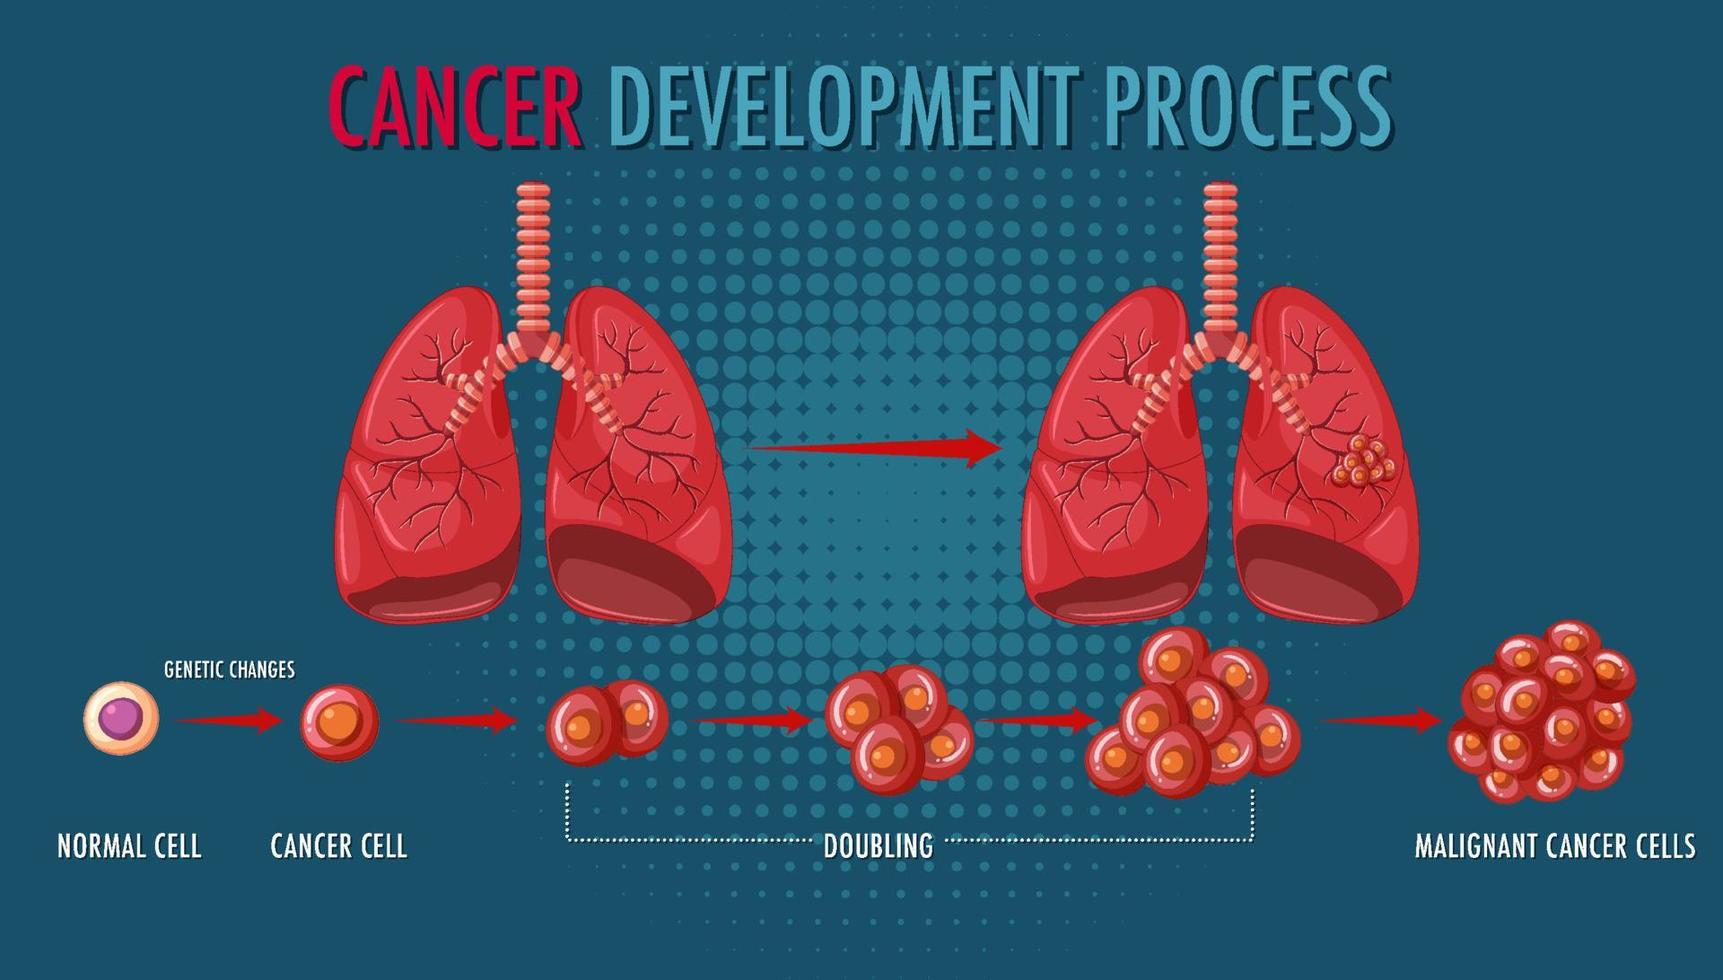 Cancer Development Process infographic vector